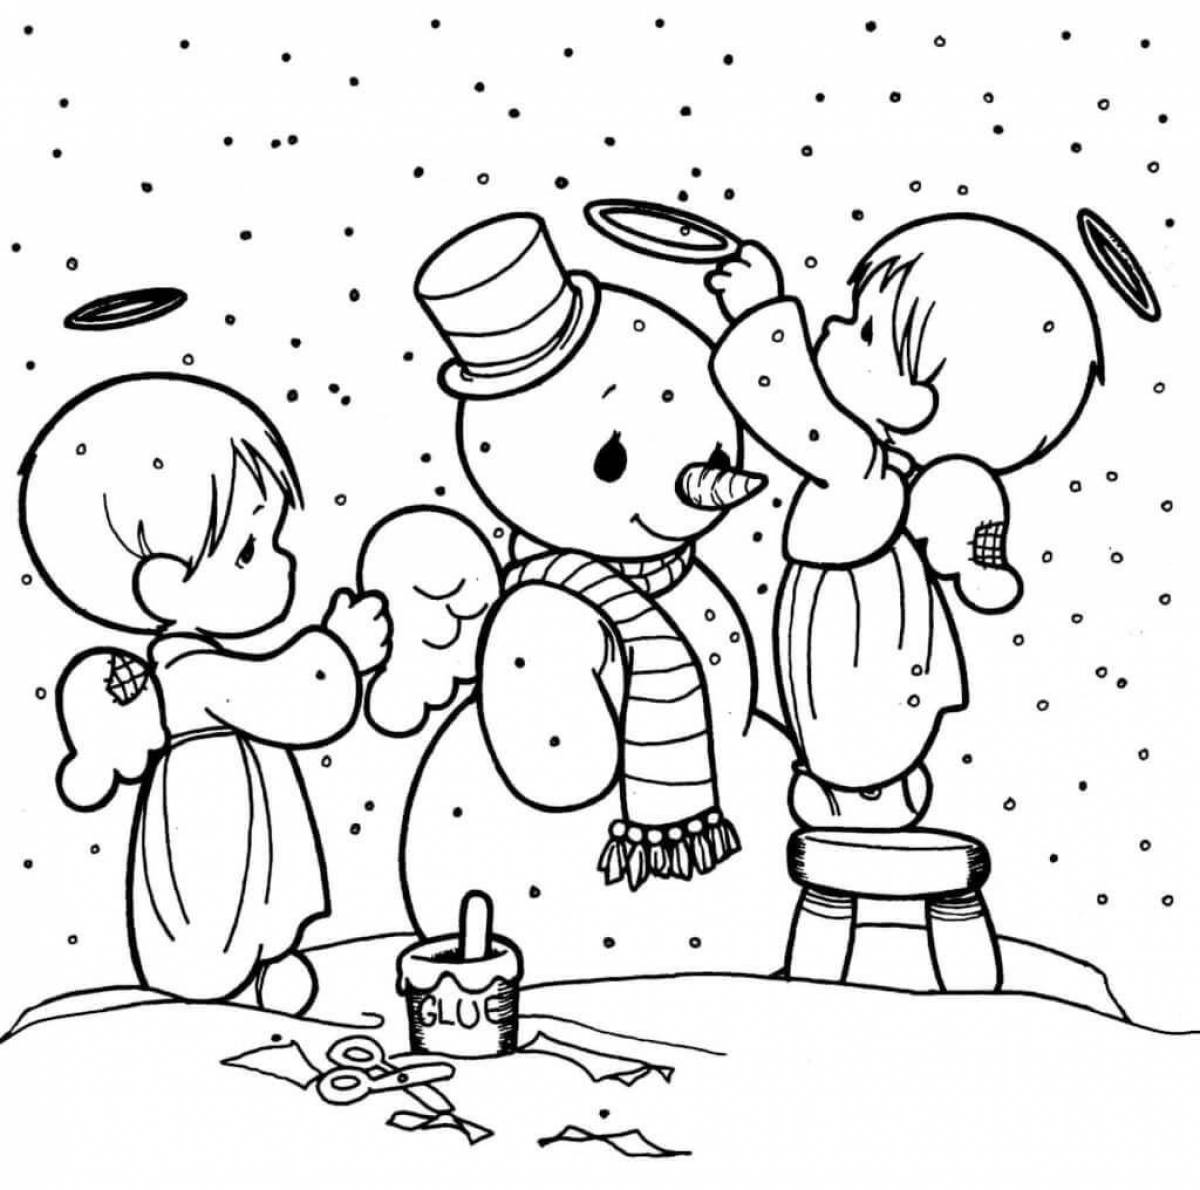 Children making a snowman coloring book